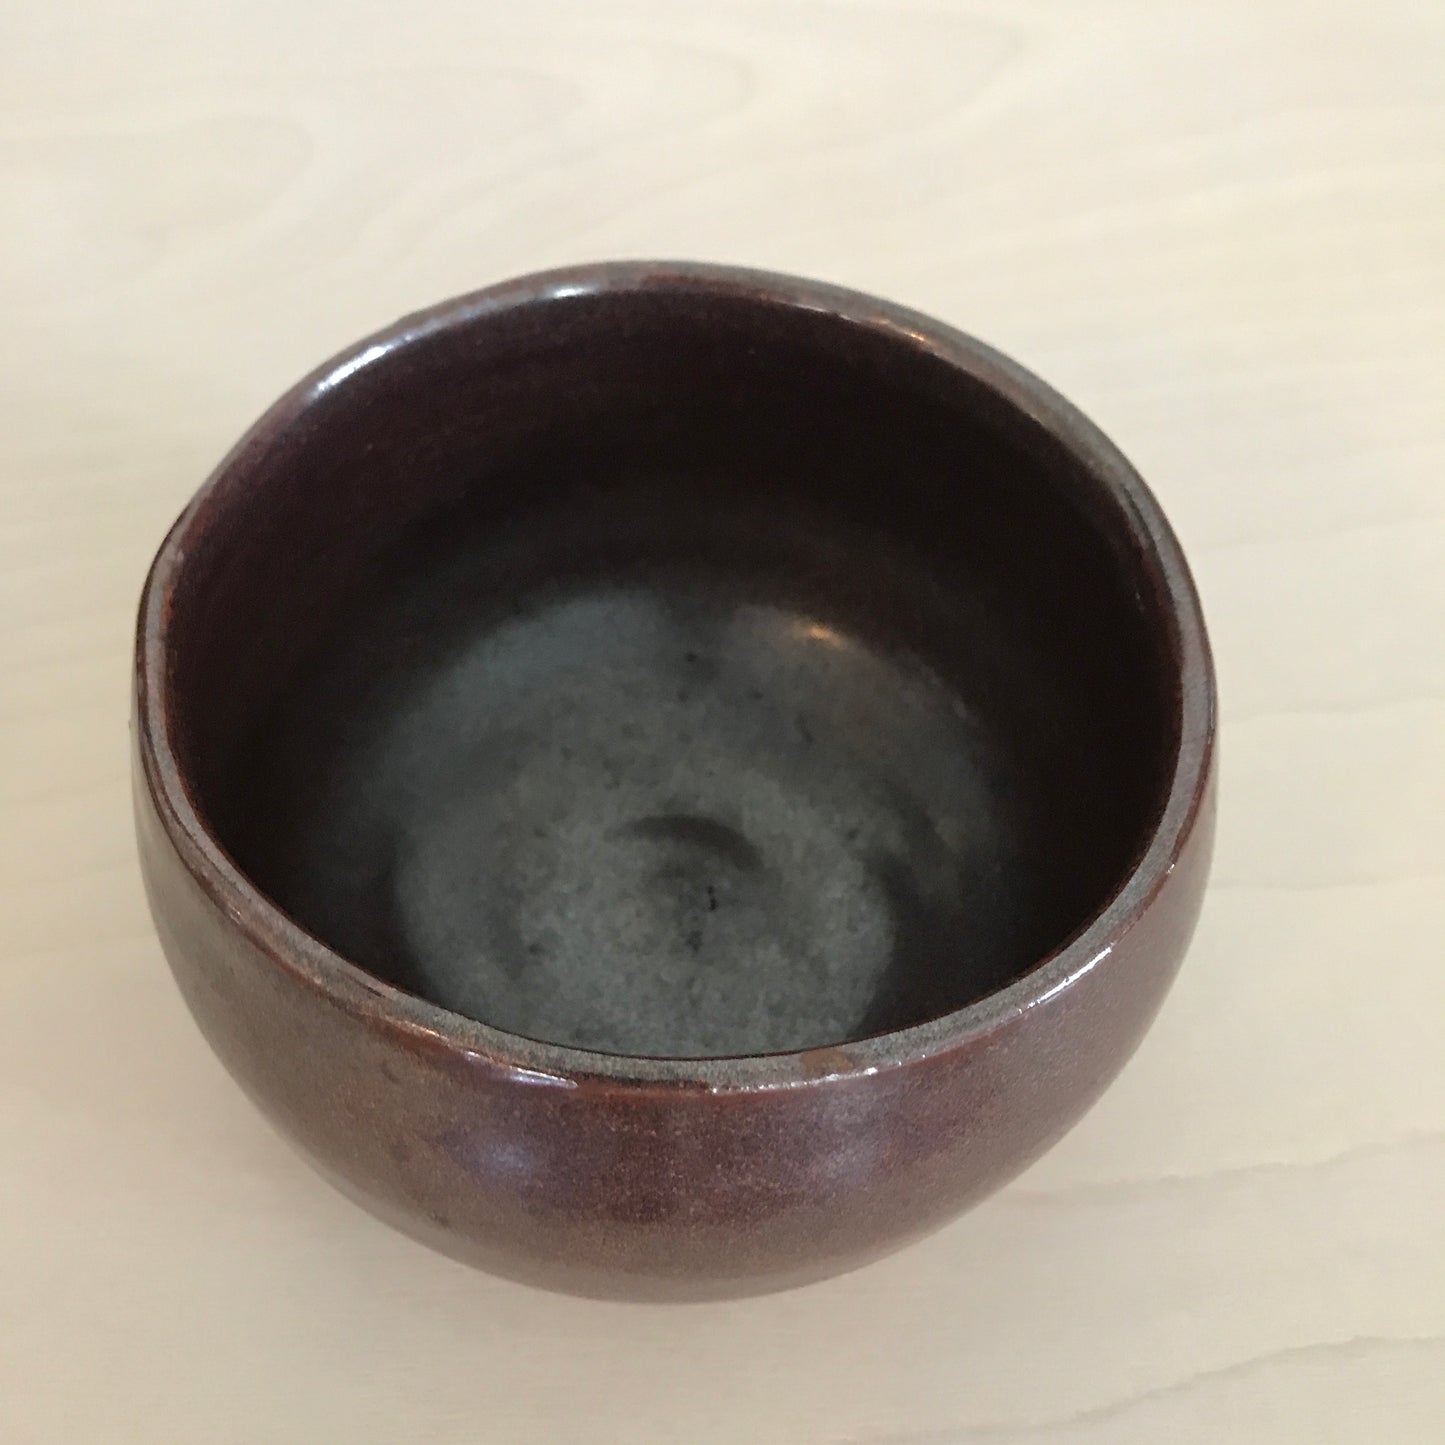 Vintage Stoneware Pottery Bowl